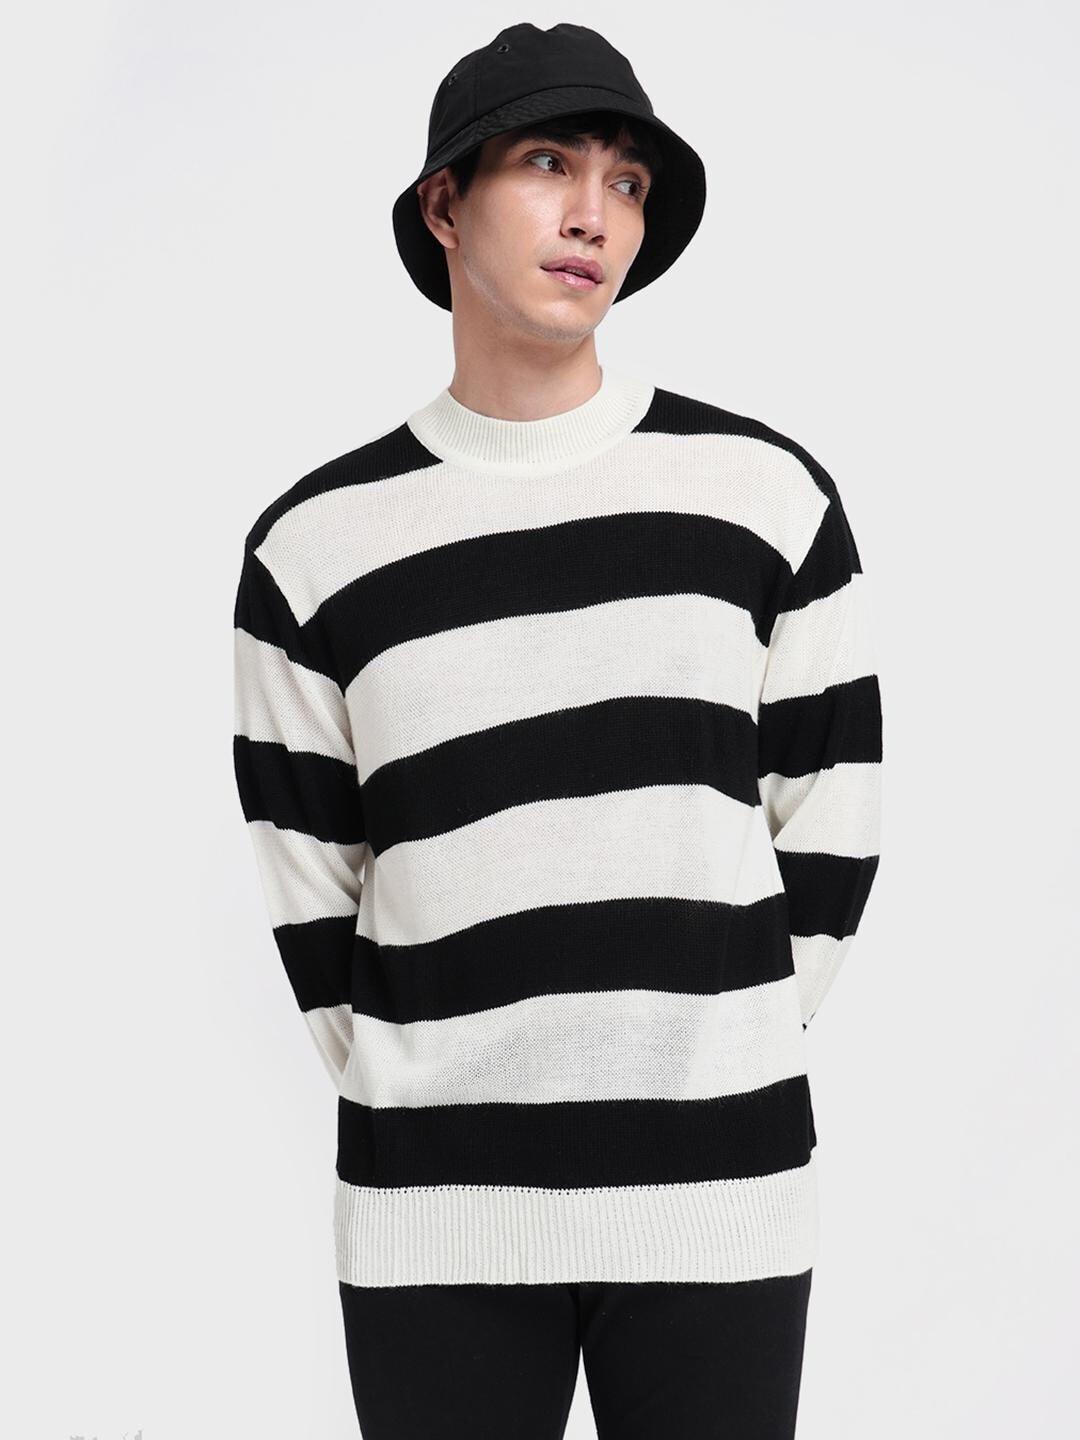 Bewakoof Men Black & White Striped Oversized Sweater